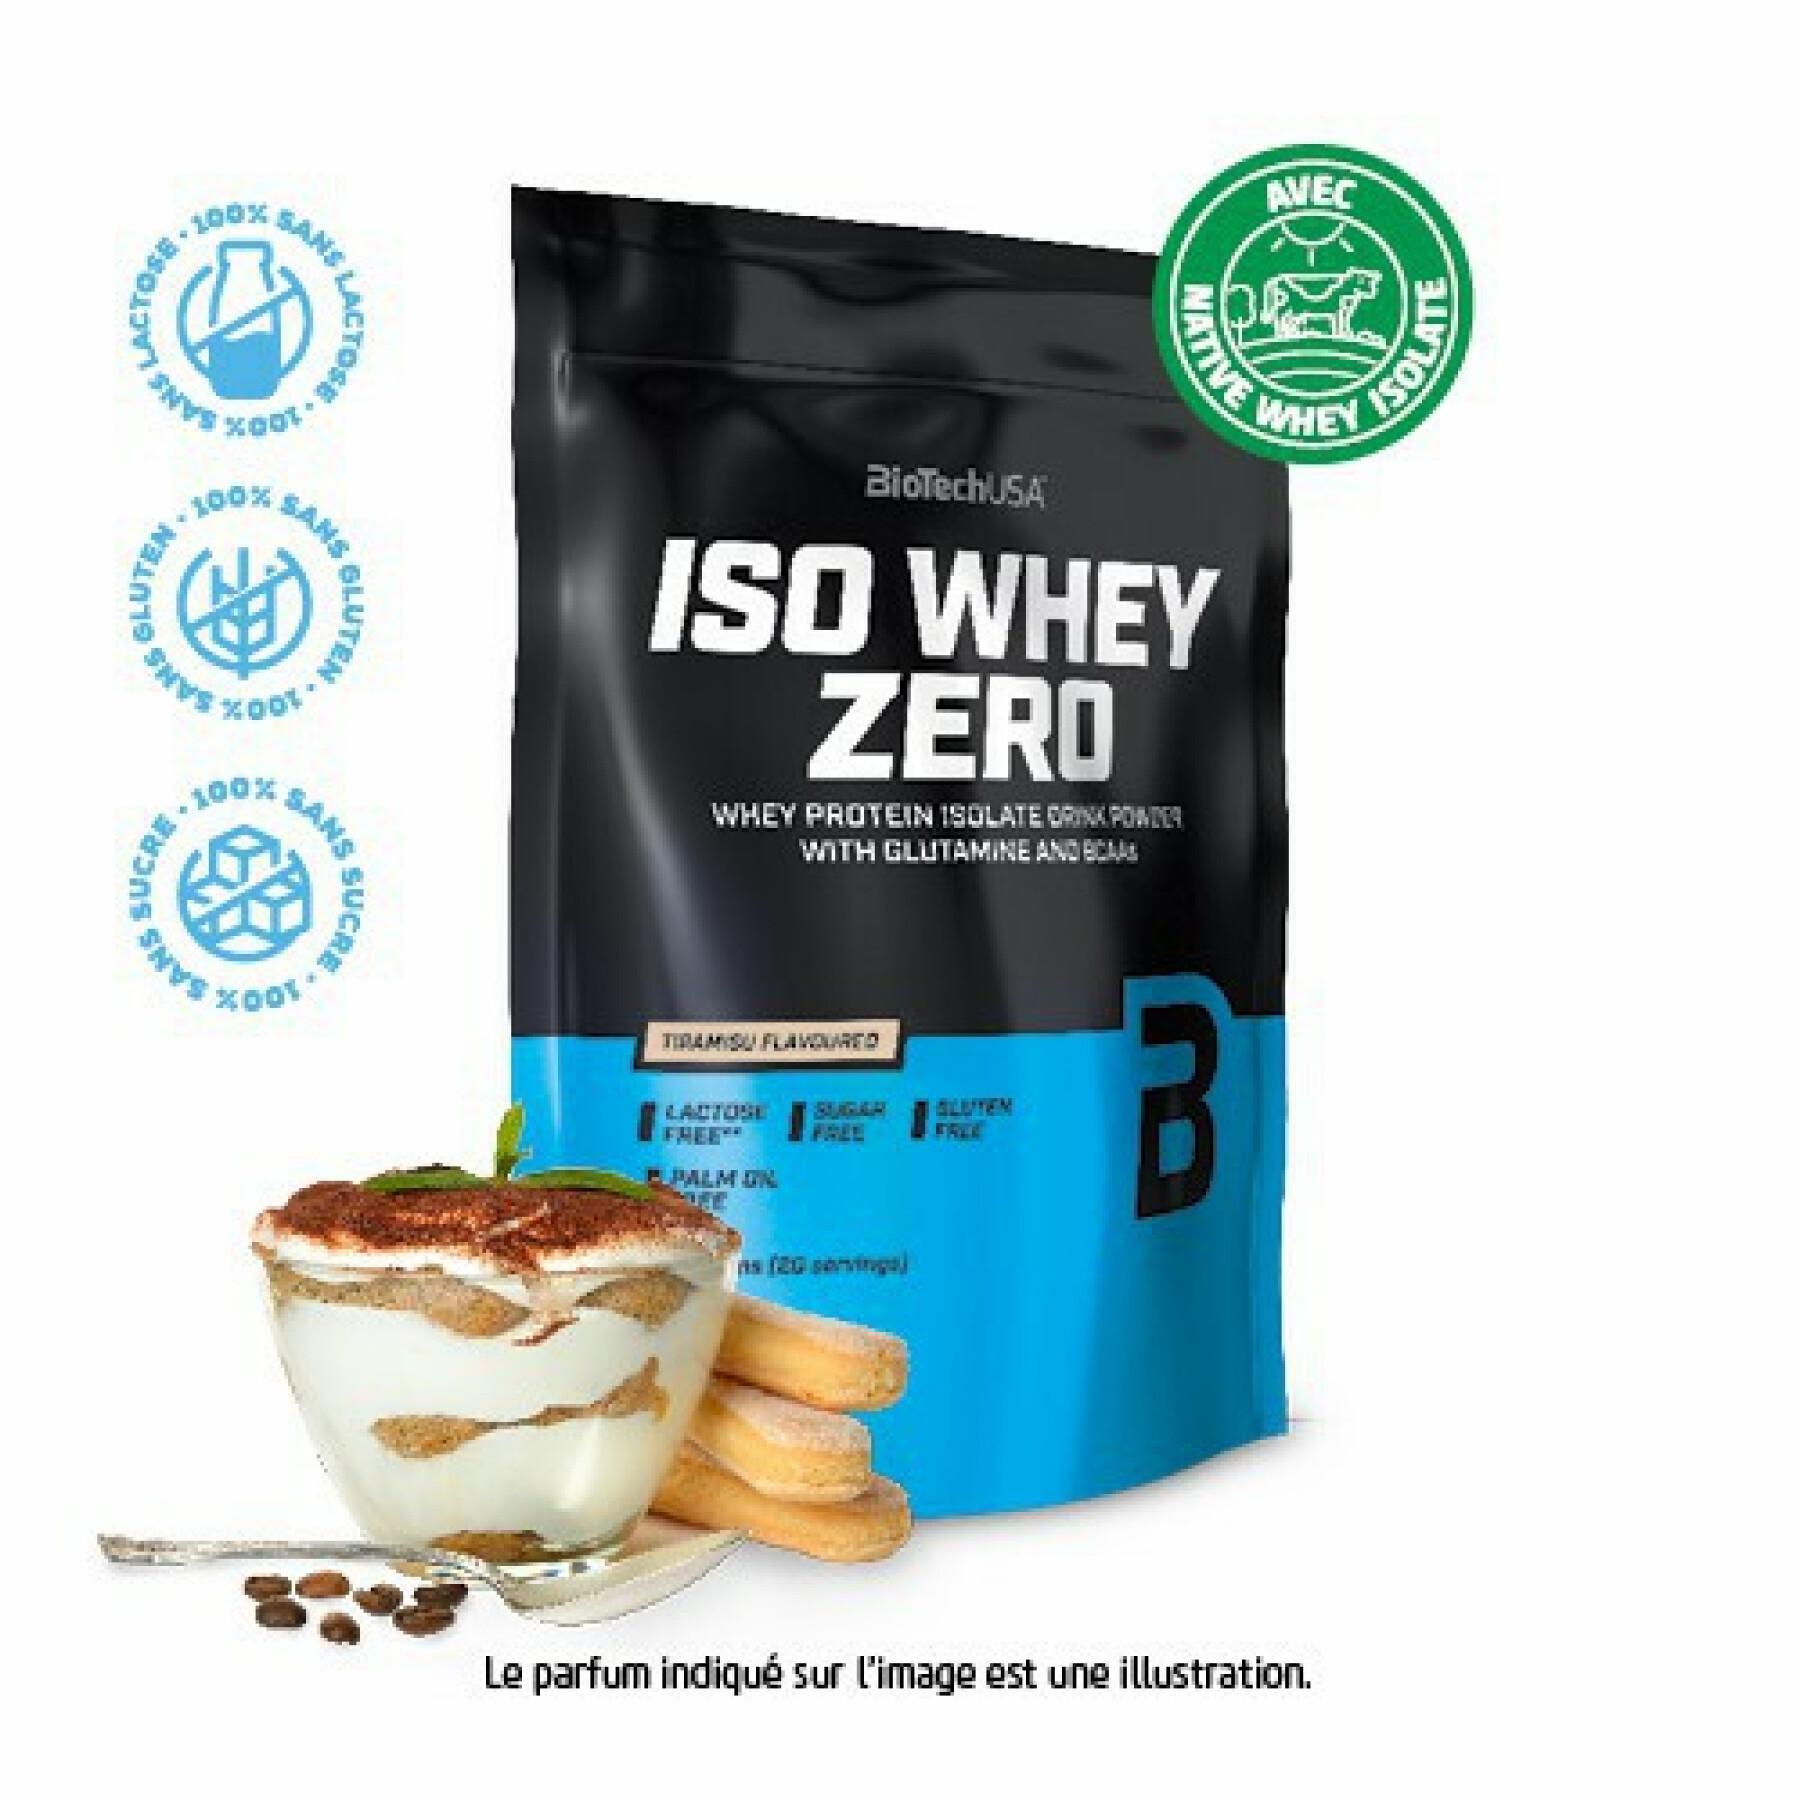 Paquete de 10 bolsas de proteínas Biotech USA iso whey zero lactose free - Tiramisu - 500g